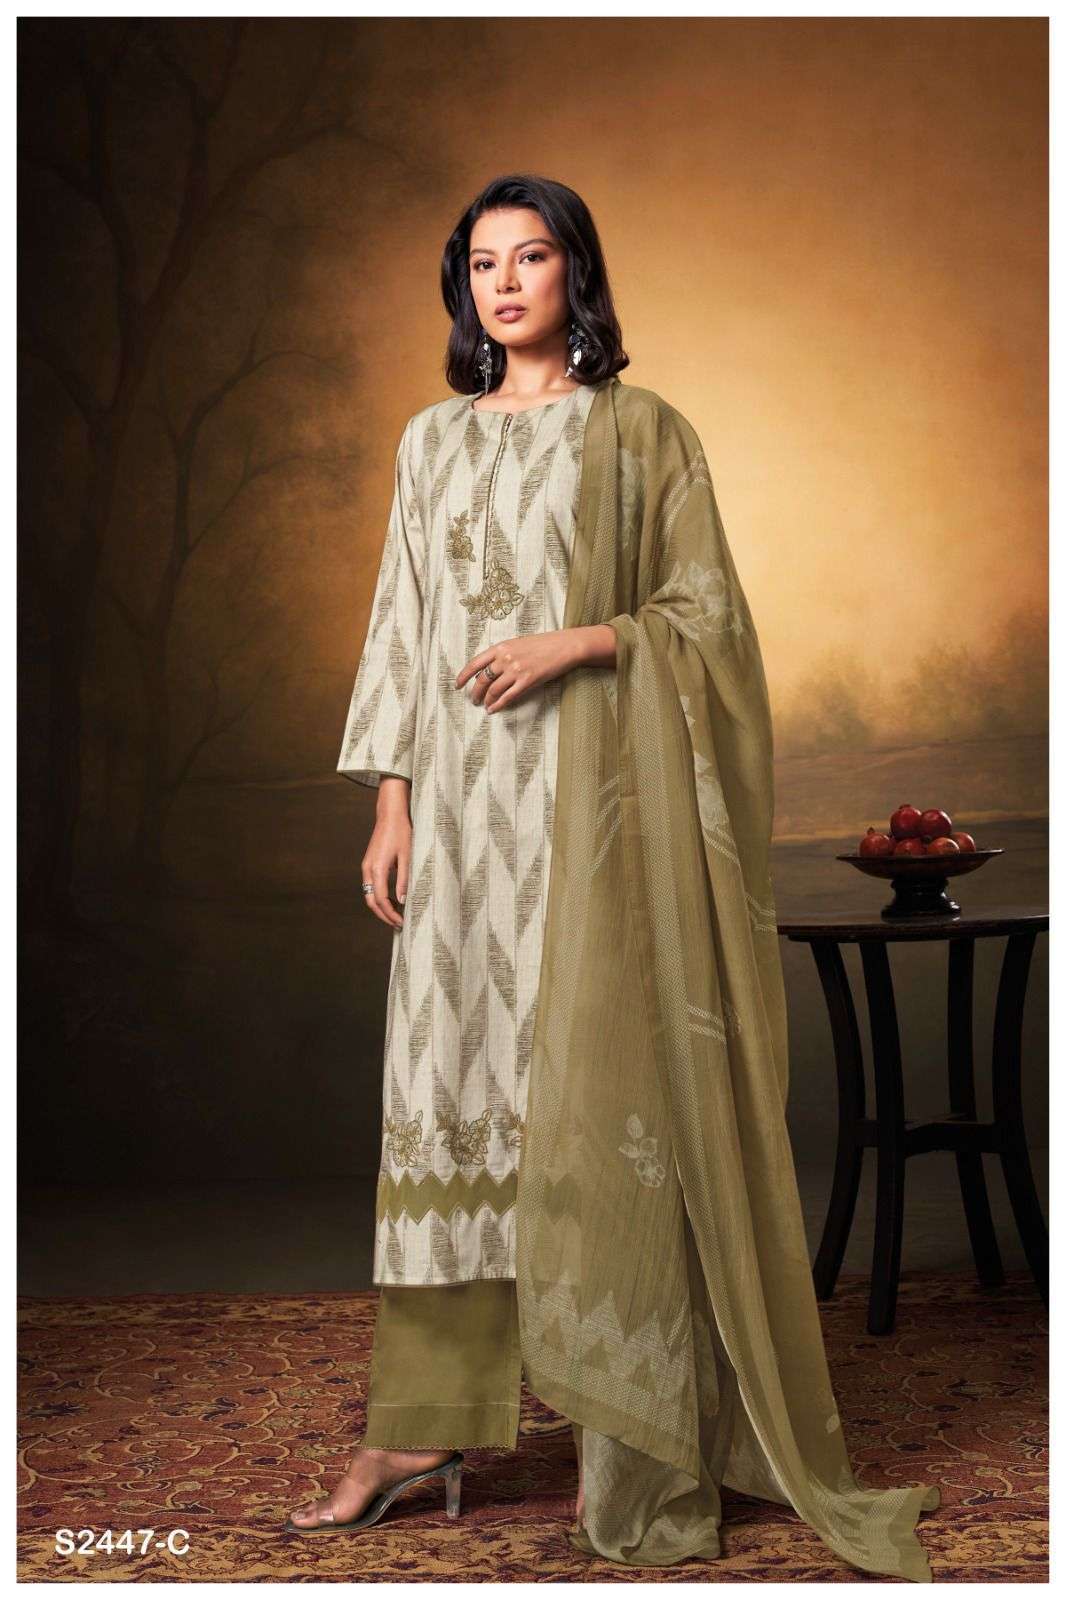 GANGA HUMSIHA 2447 Bulk dress materials suppliers in Kolkata